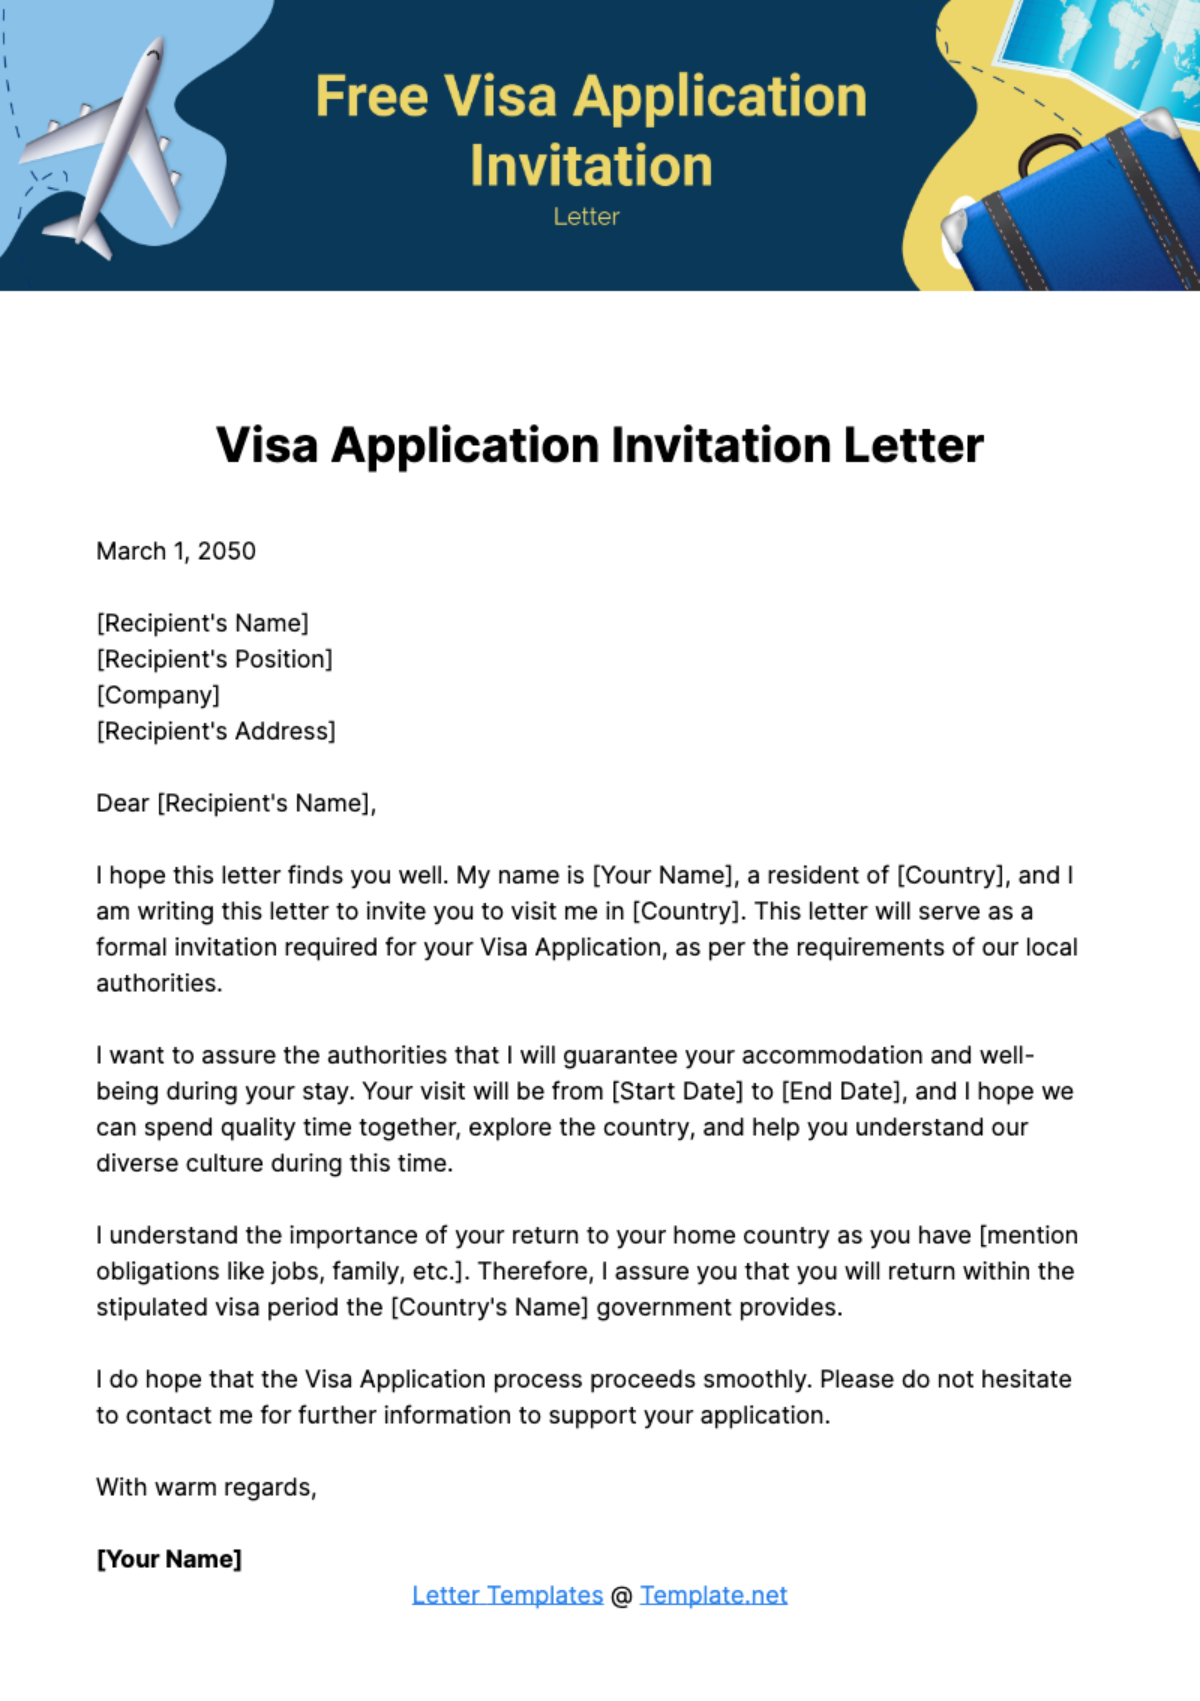 Free Visa Application Invitation Letter Template